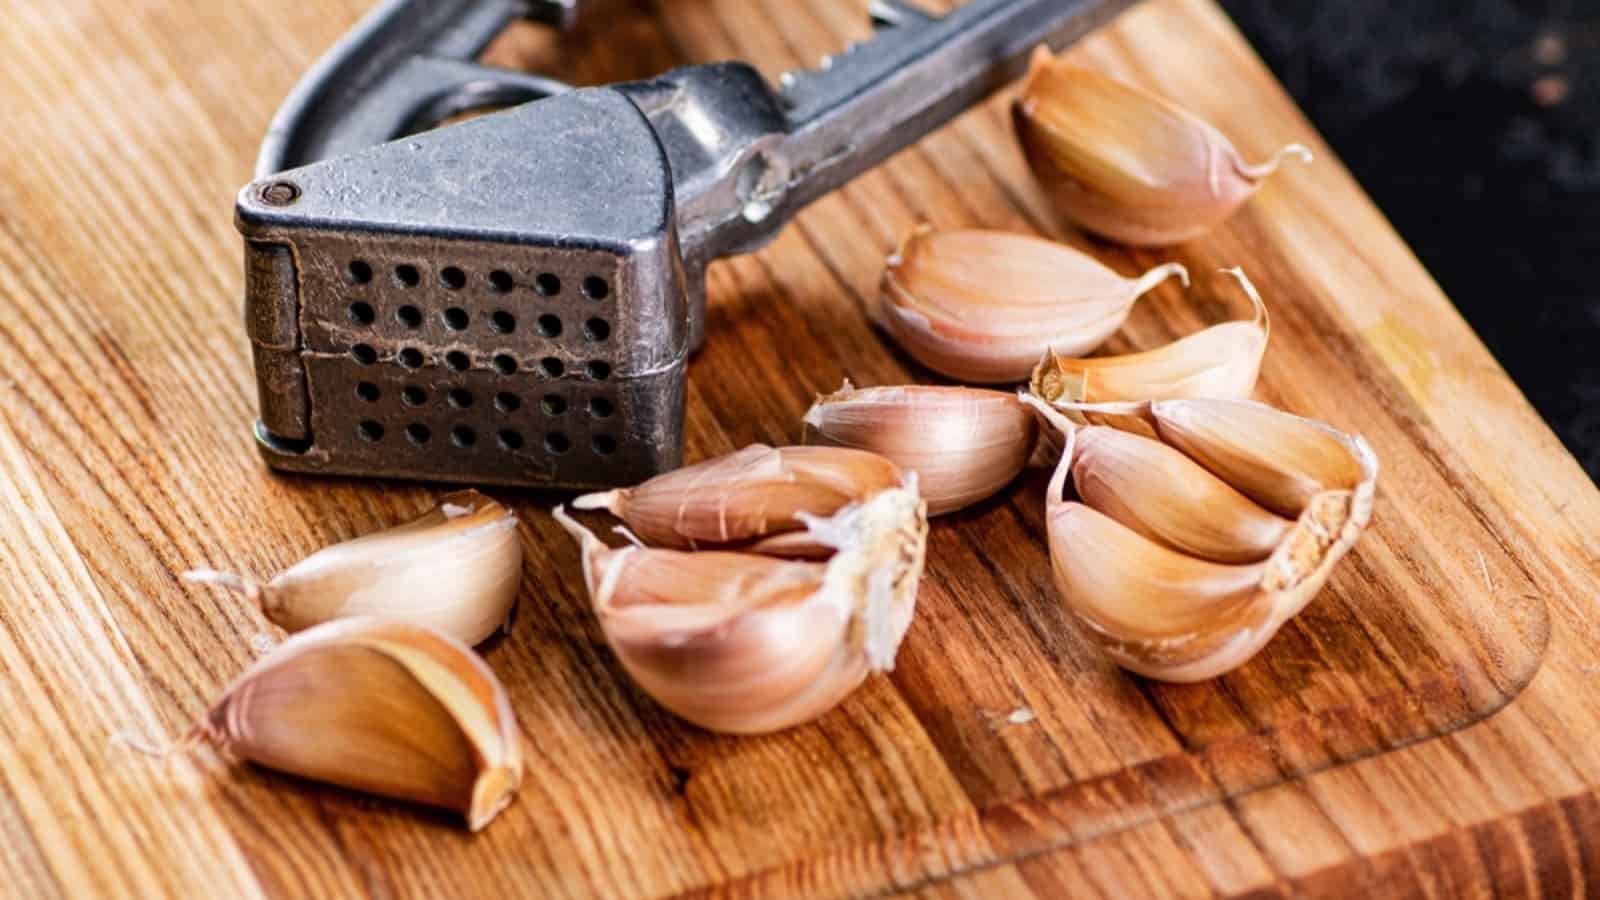 Garlic and garlic grater on a wooden cutting board.